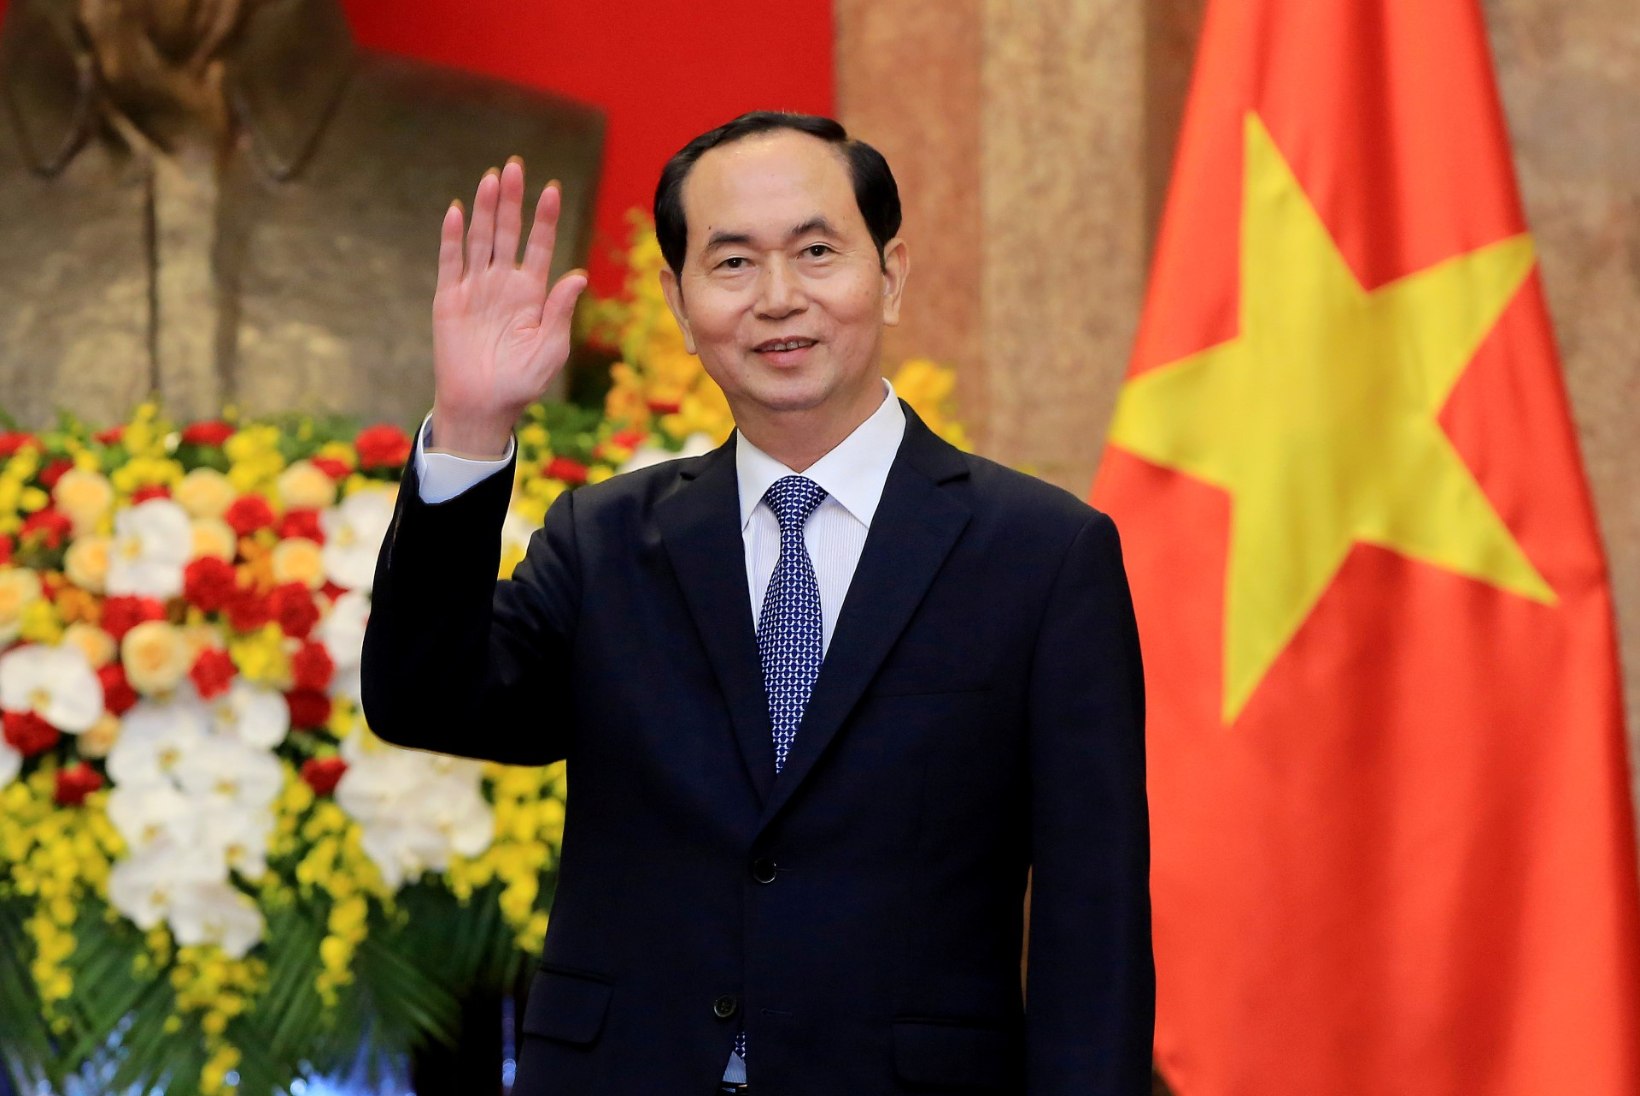 Suri Vietnami president Tran Dai Quang